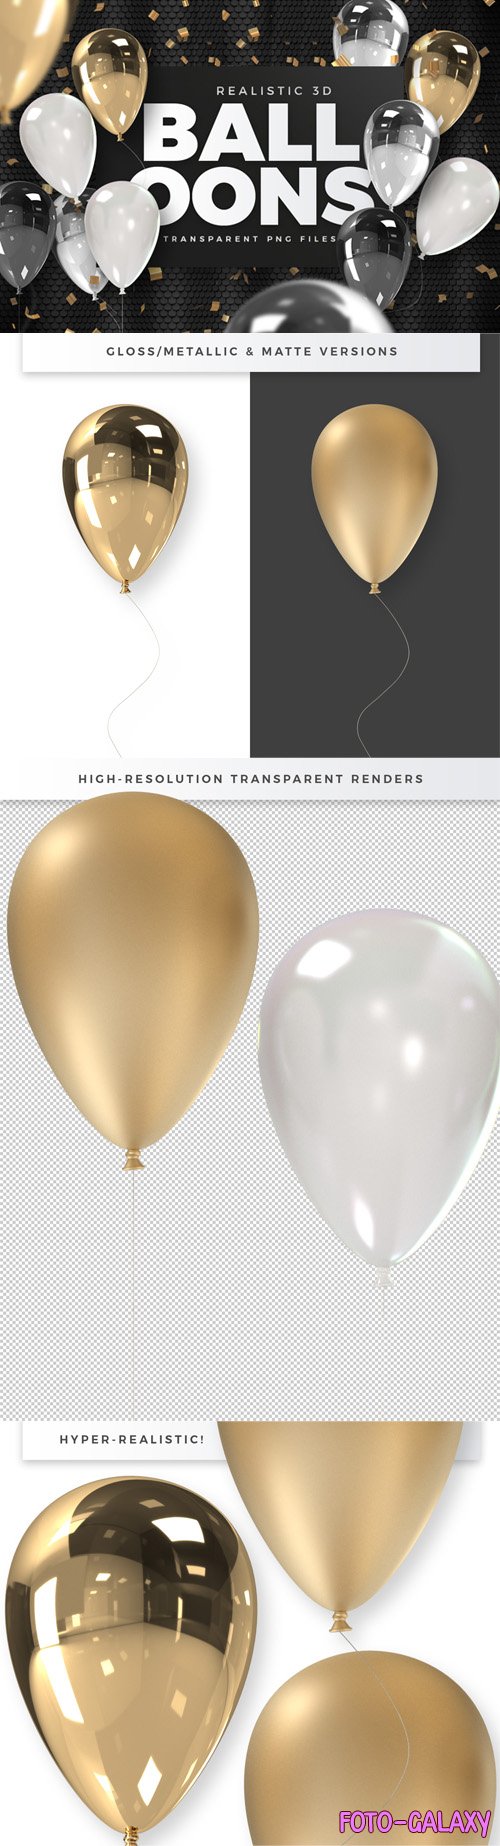 Realistic Balloons - 3D Renders